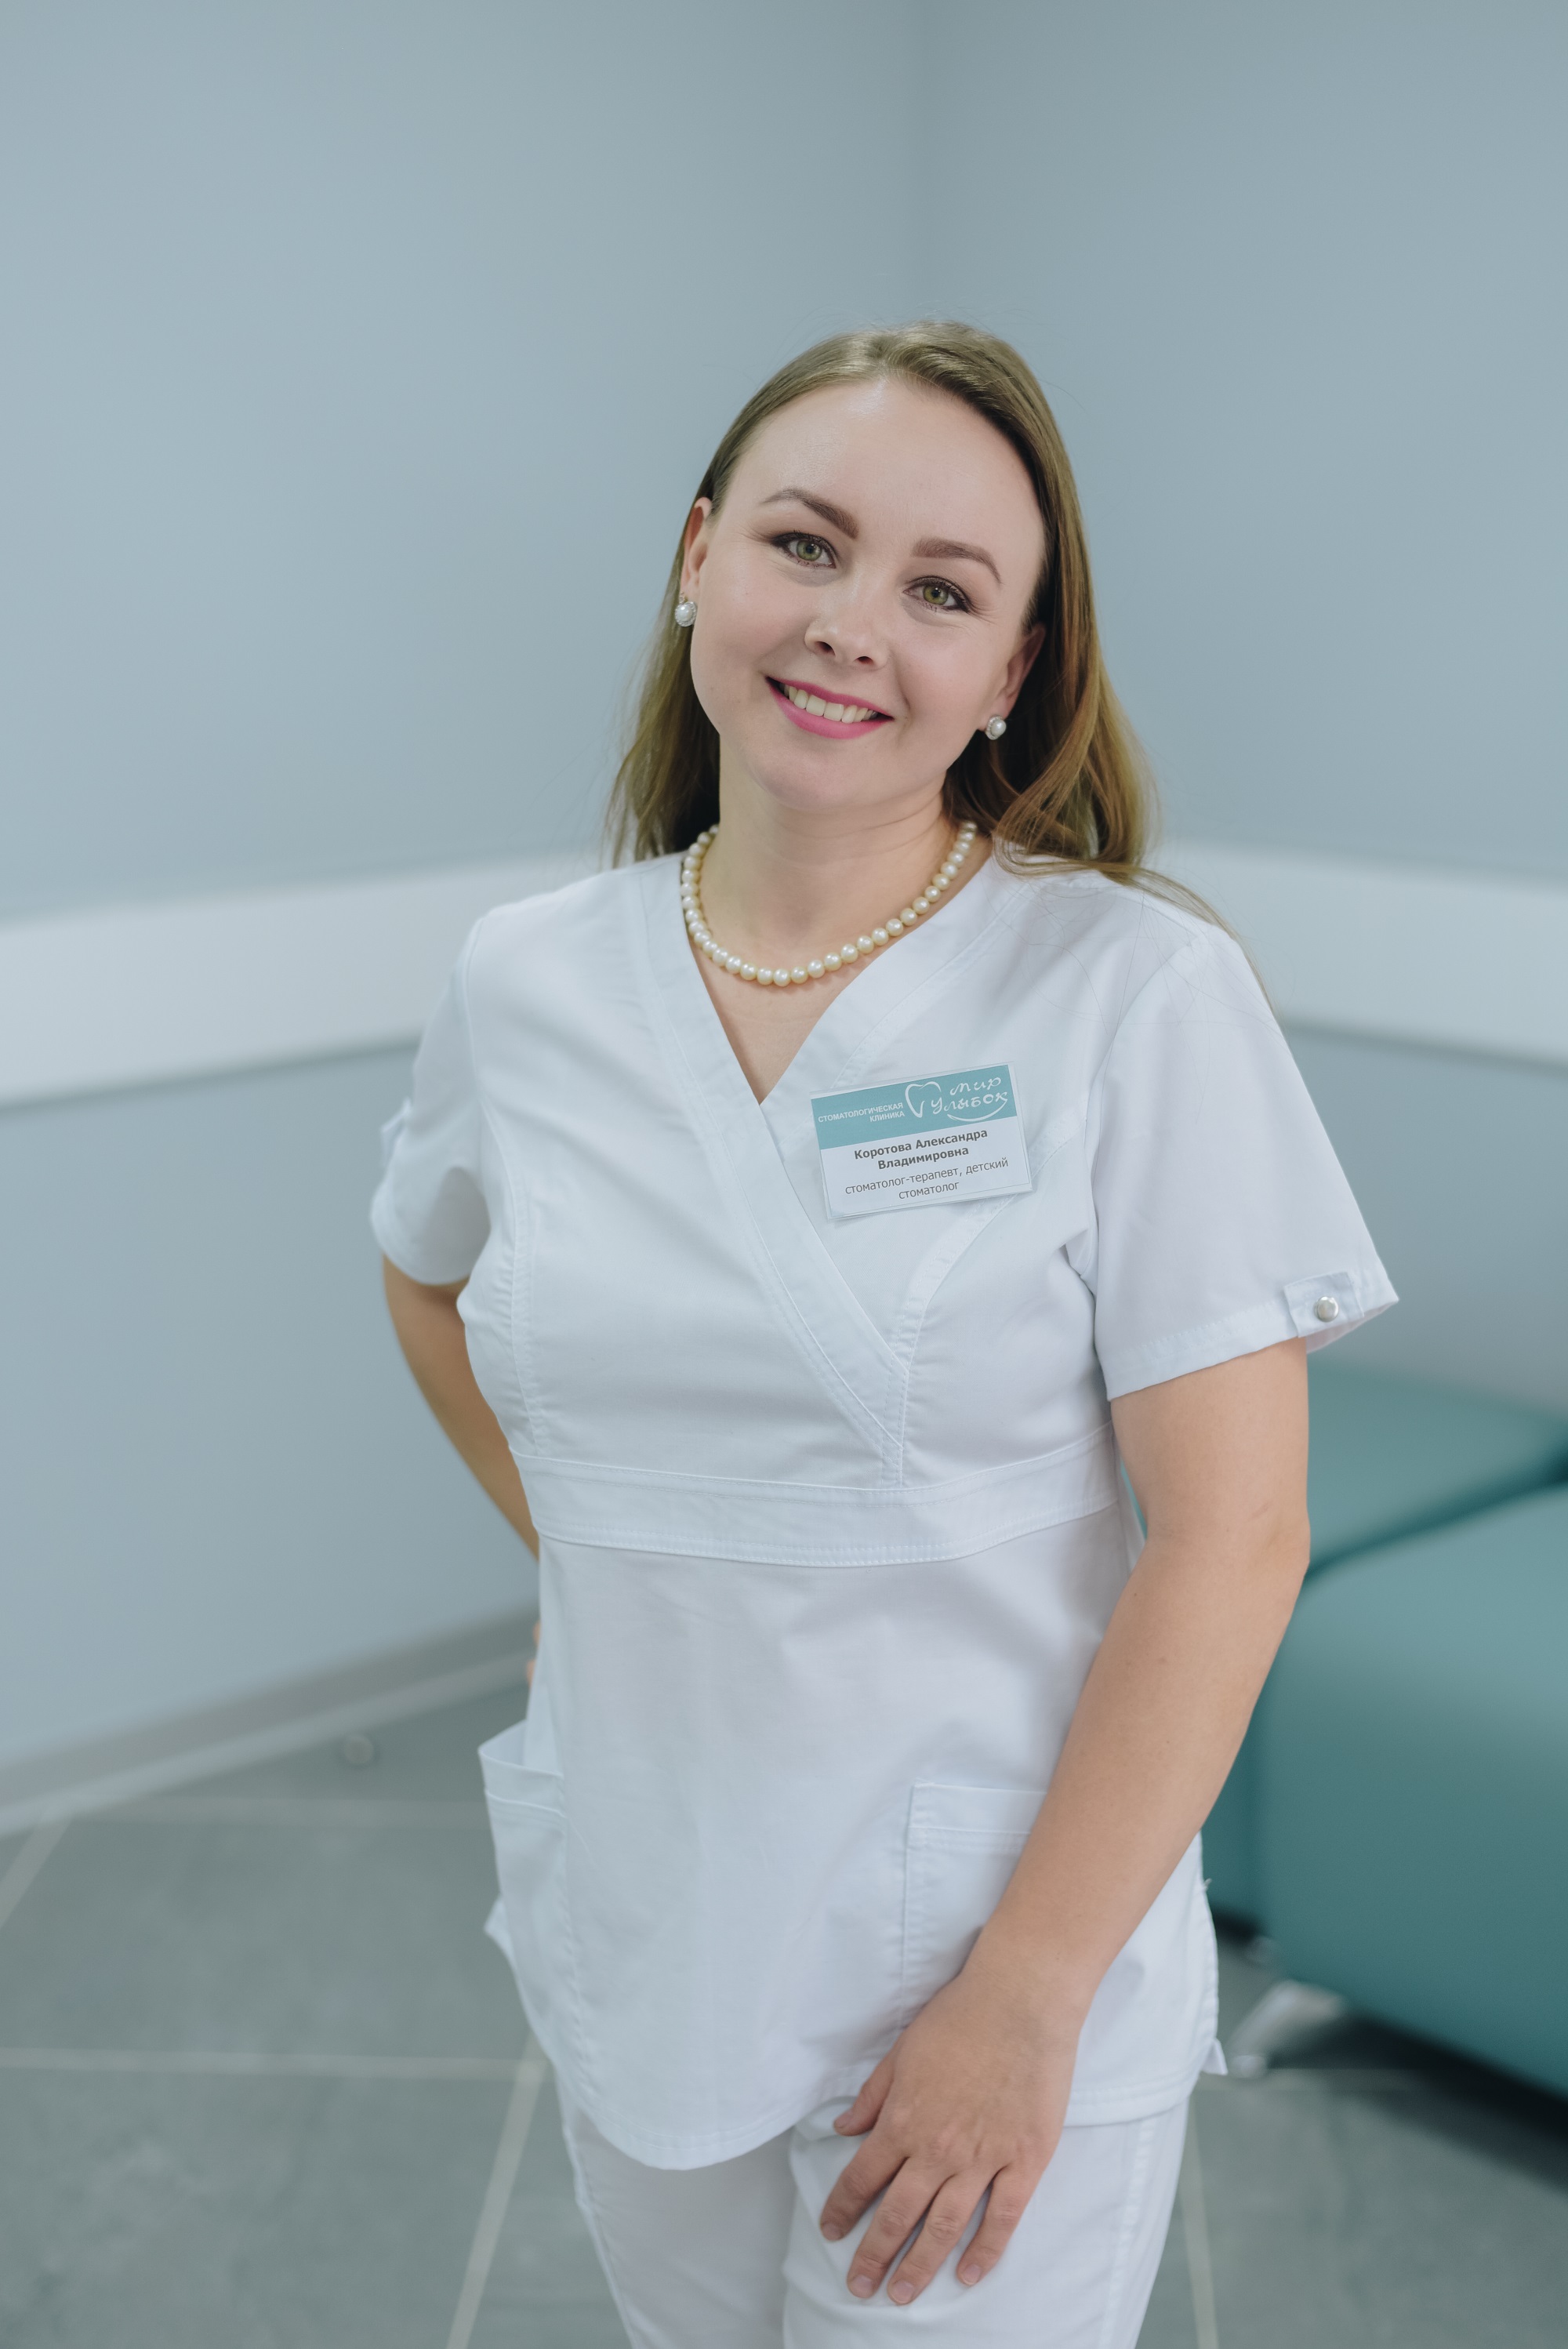 Коротова Александра Владимировна - терапевт клиники "Мир улыбок"